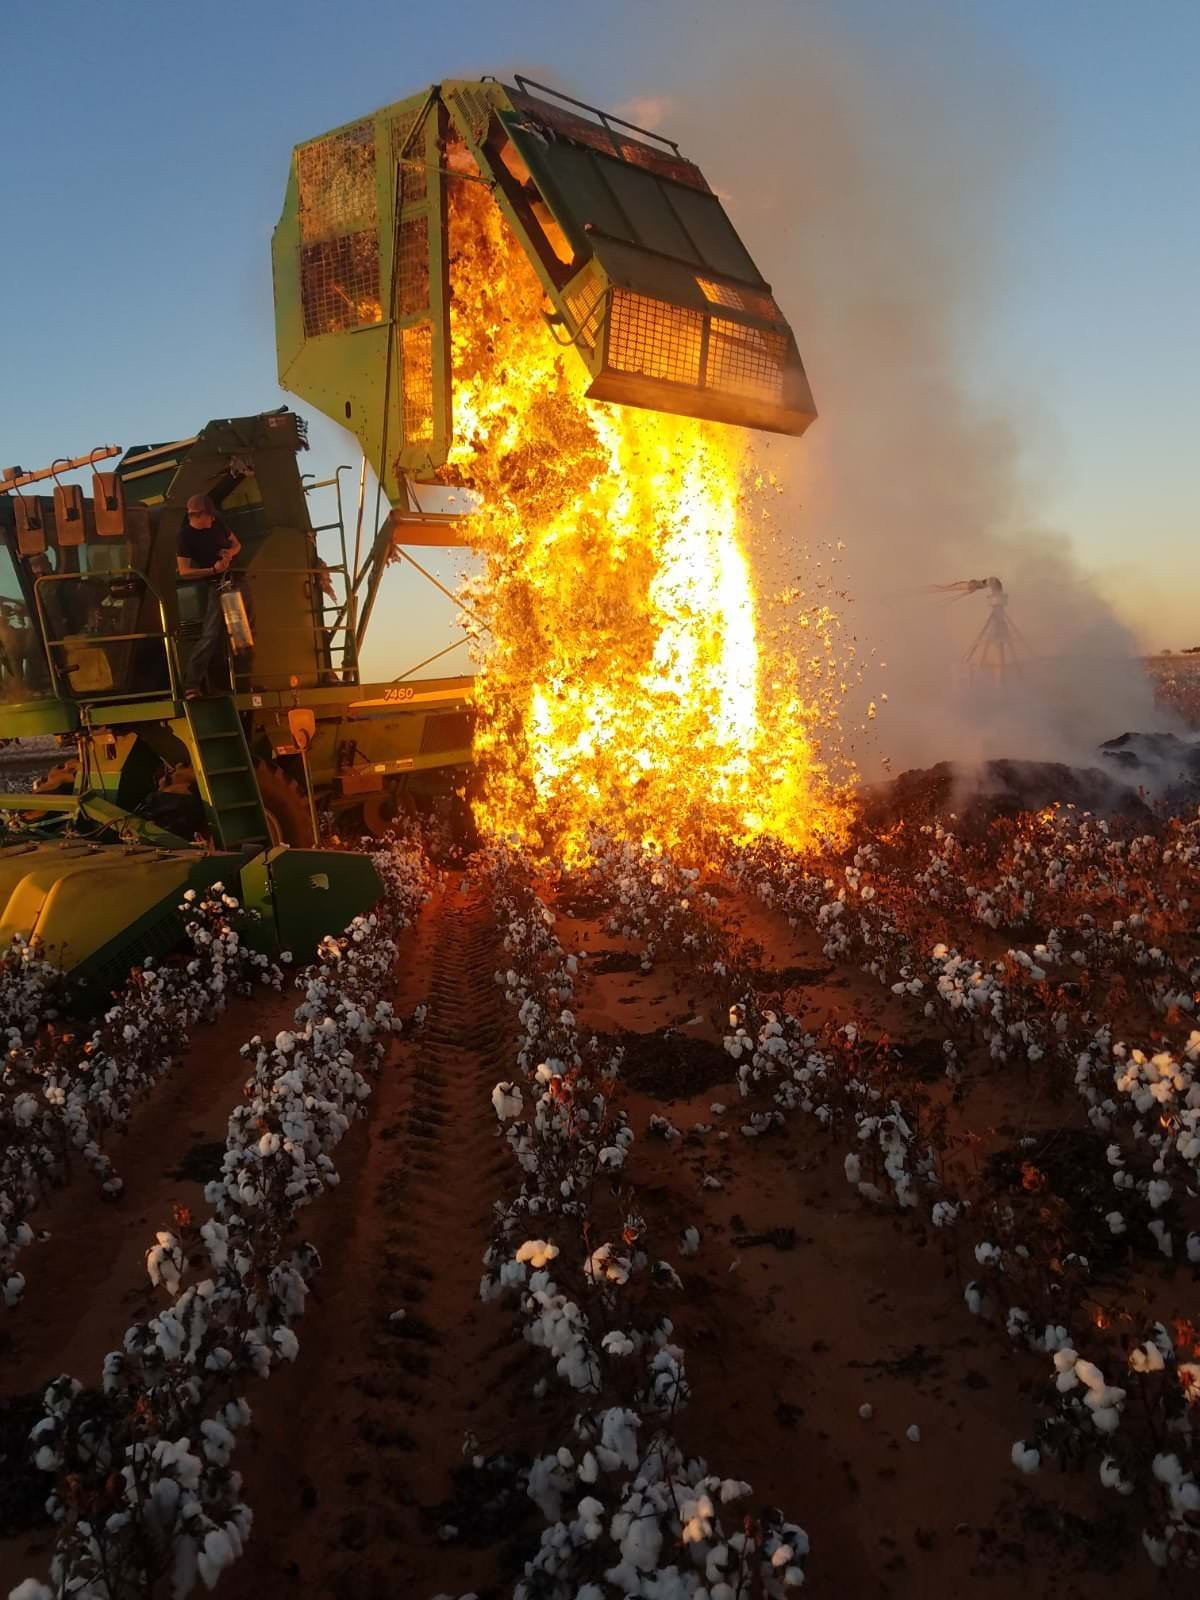 random pics - cotton harvester fire